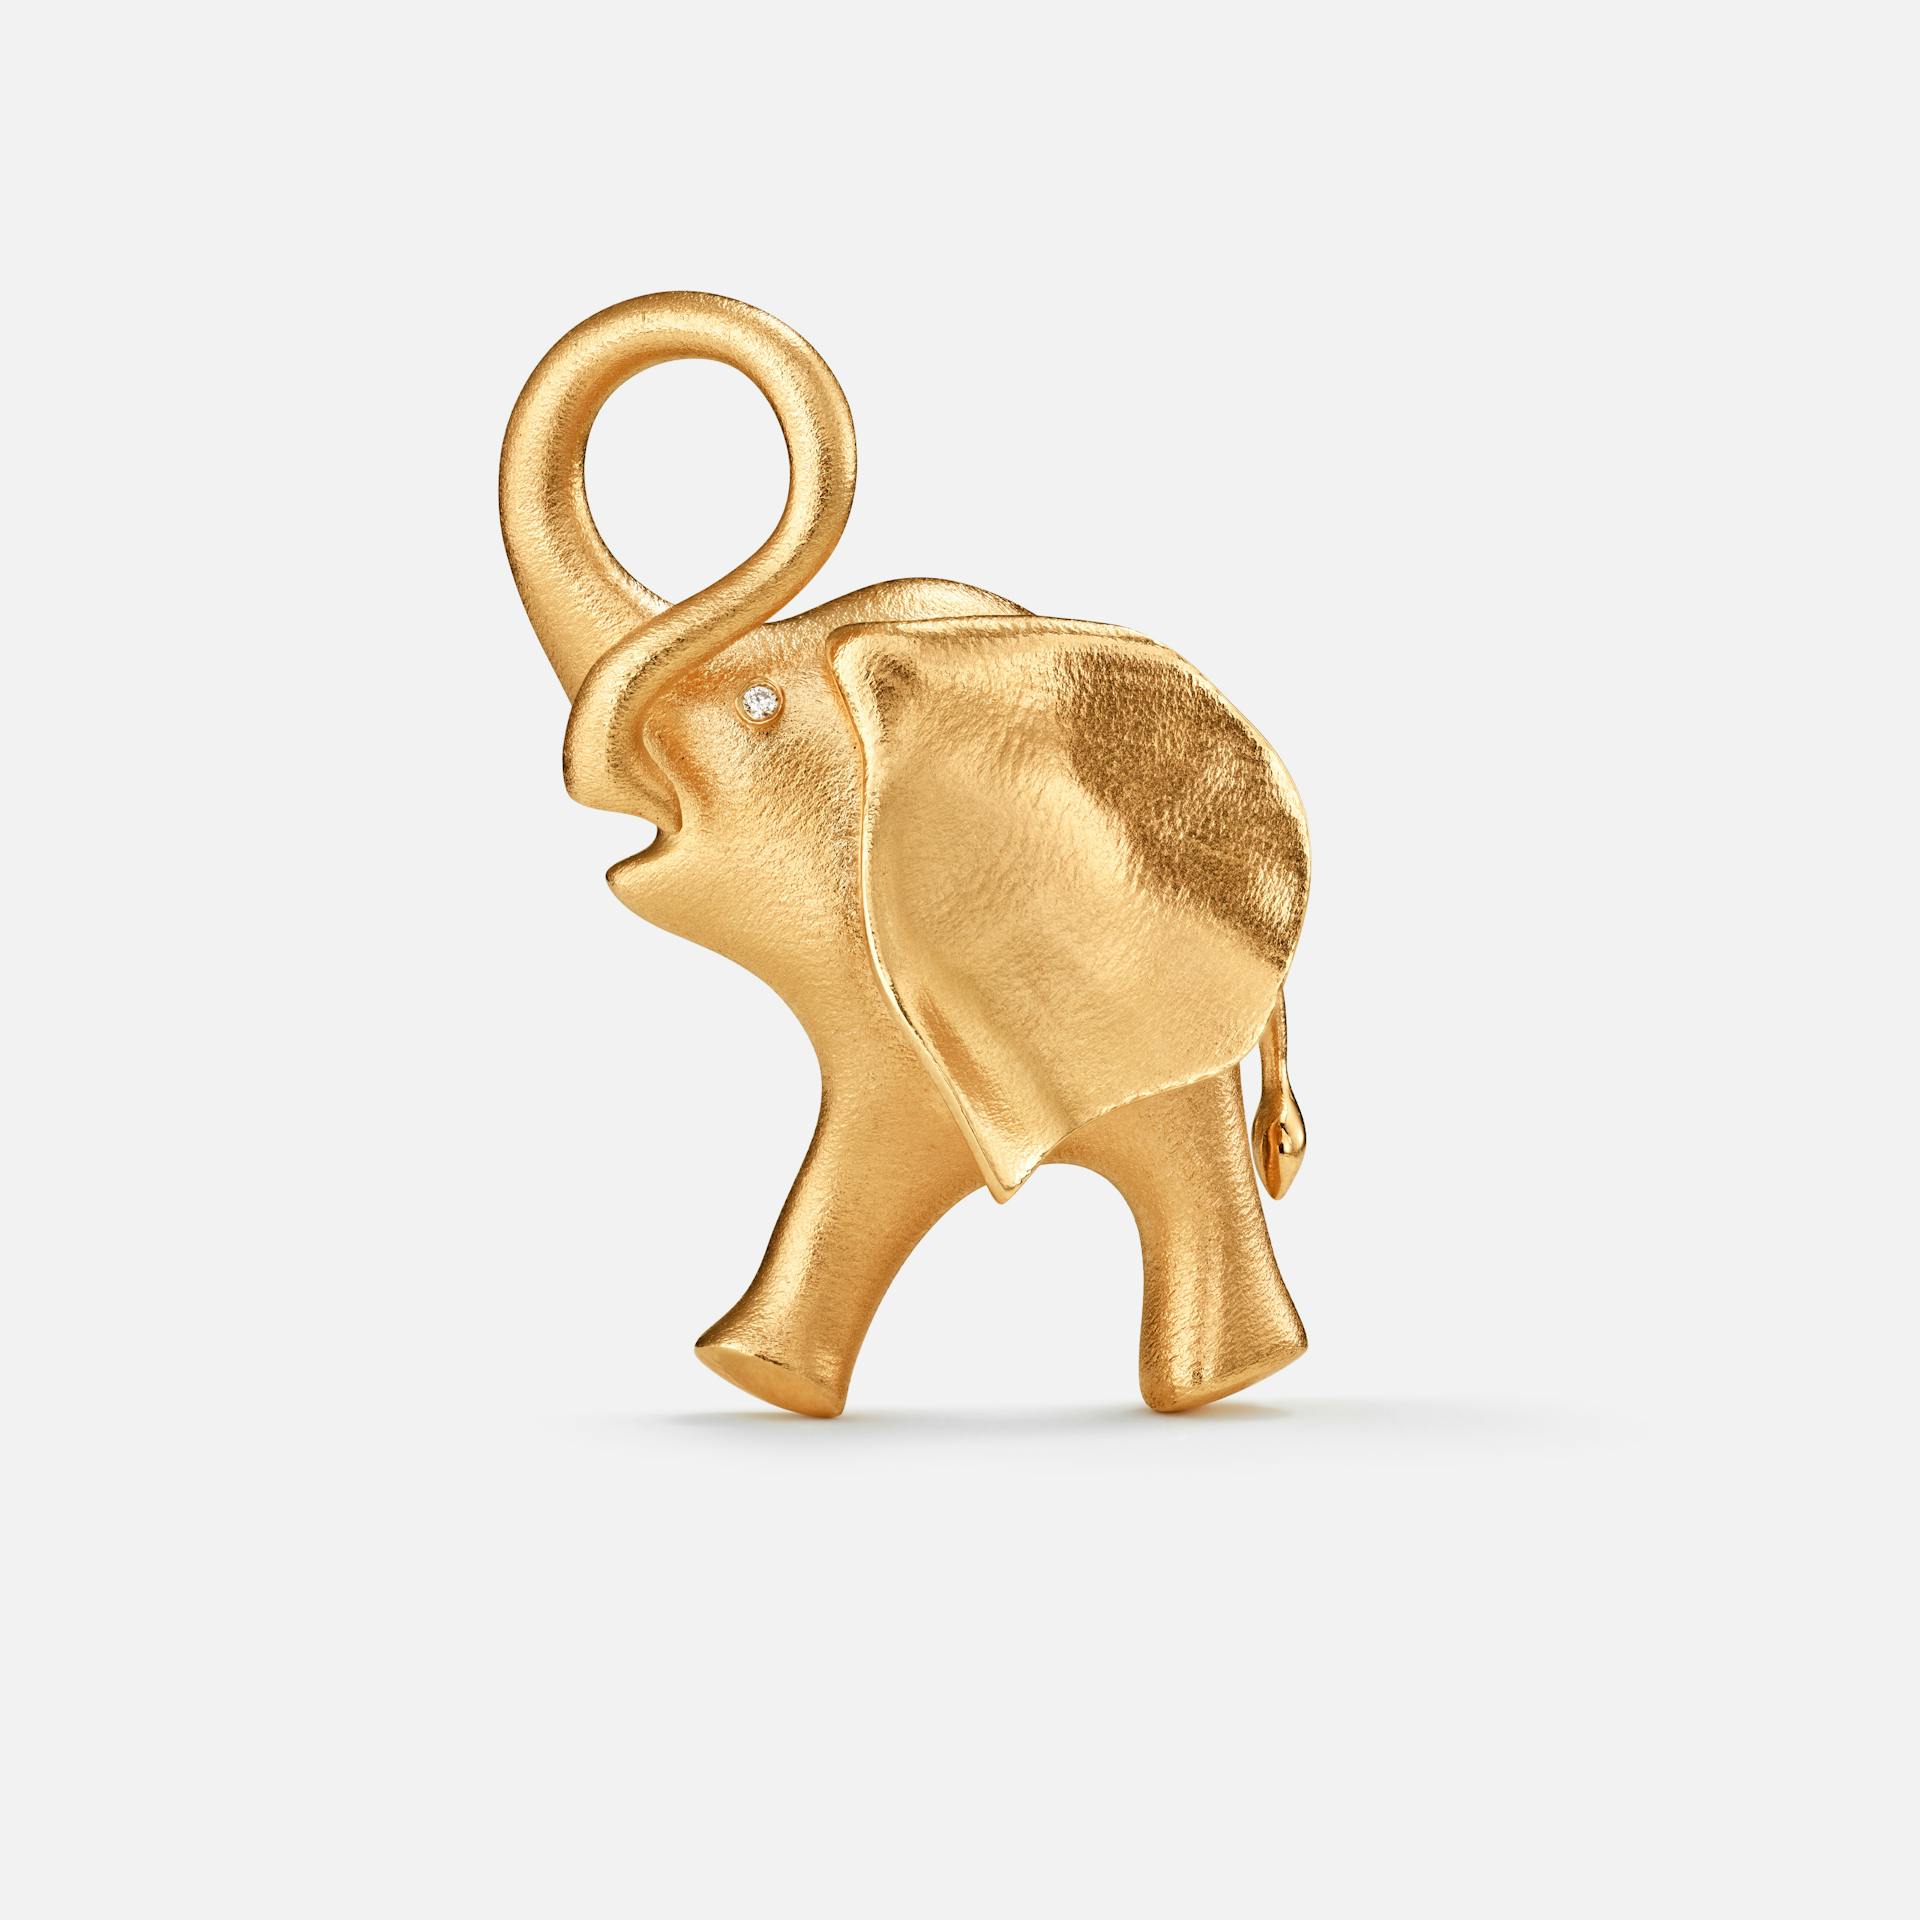 Elephant brooch 18k gold with diamonds 0.01 ct. TW.VS